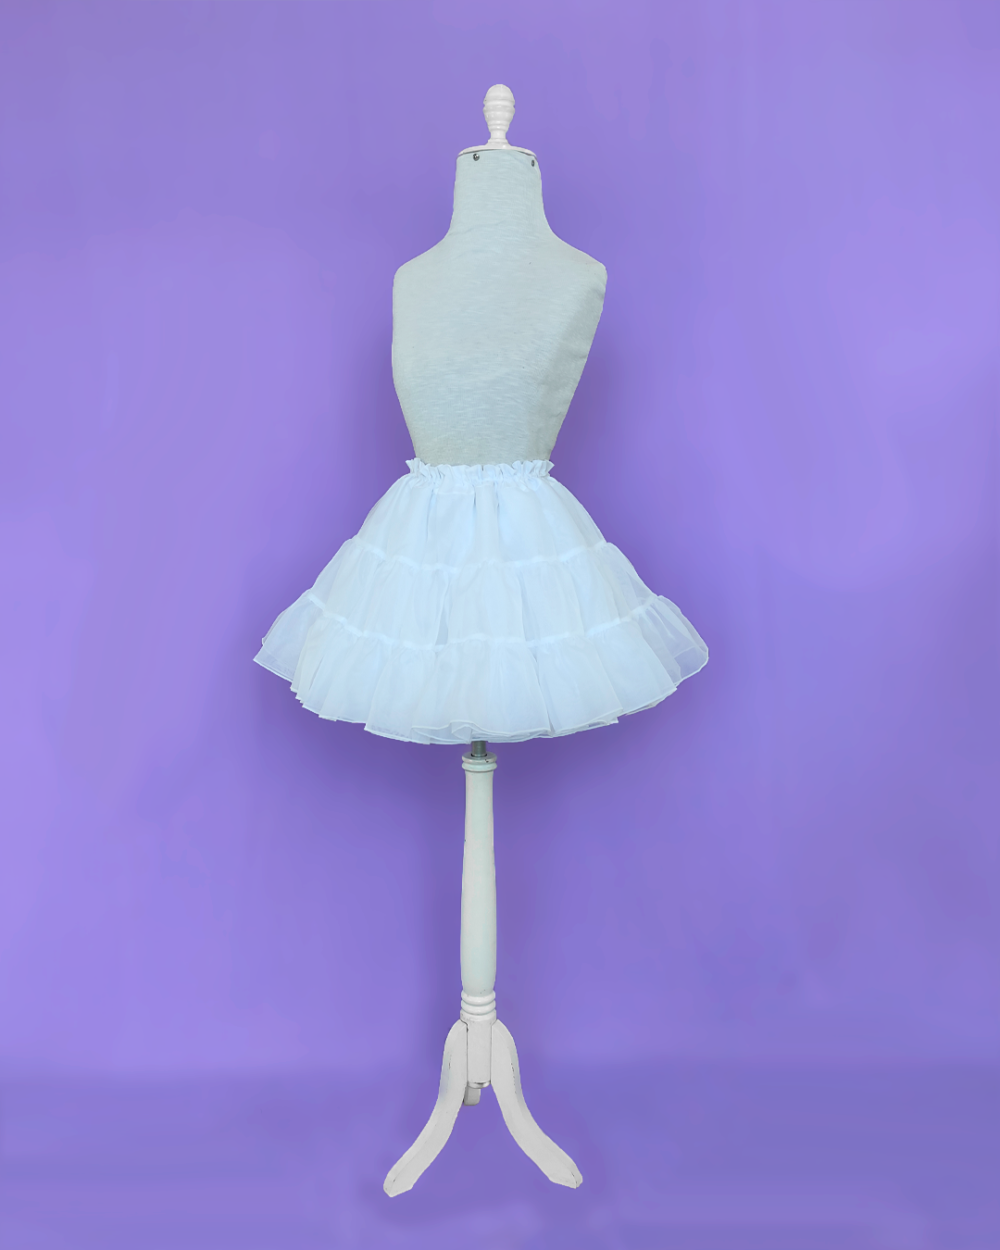 White A-line petticoat by MeLikesTea